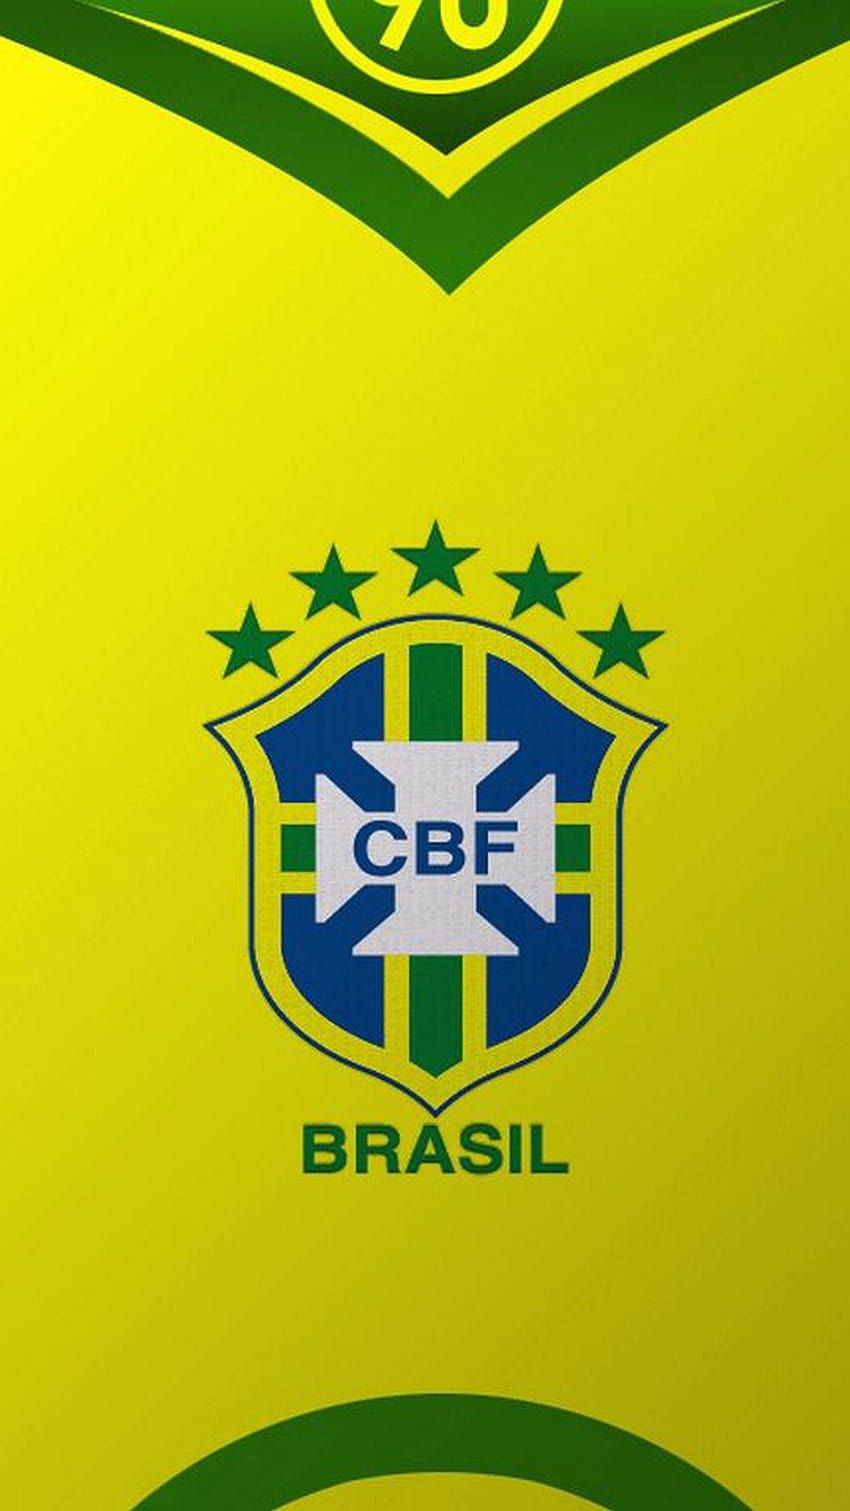 Brazil Flag Pictures  Download Free Images on Unsplash